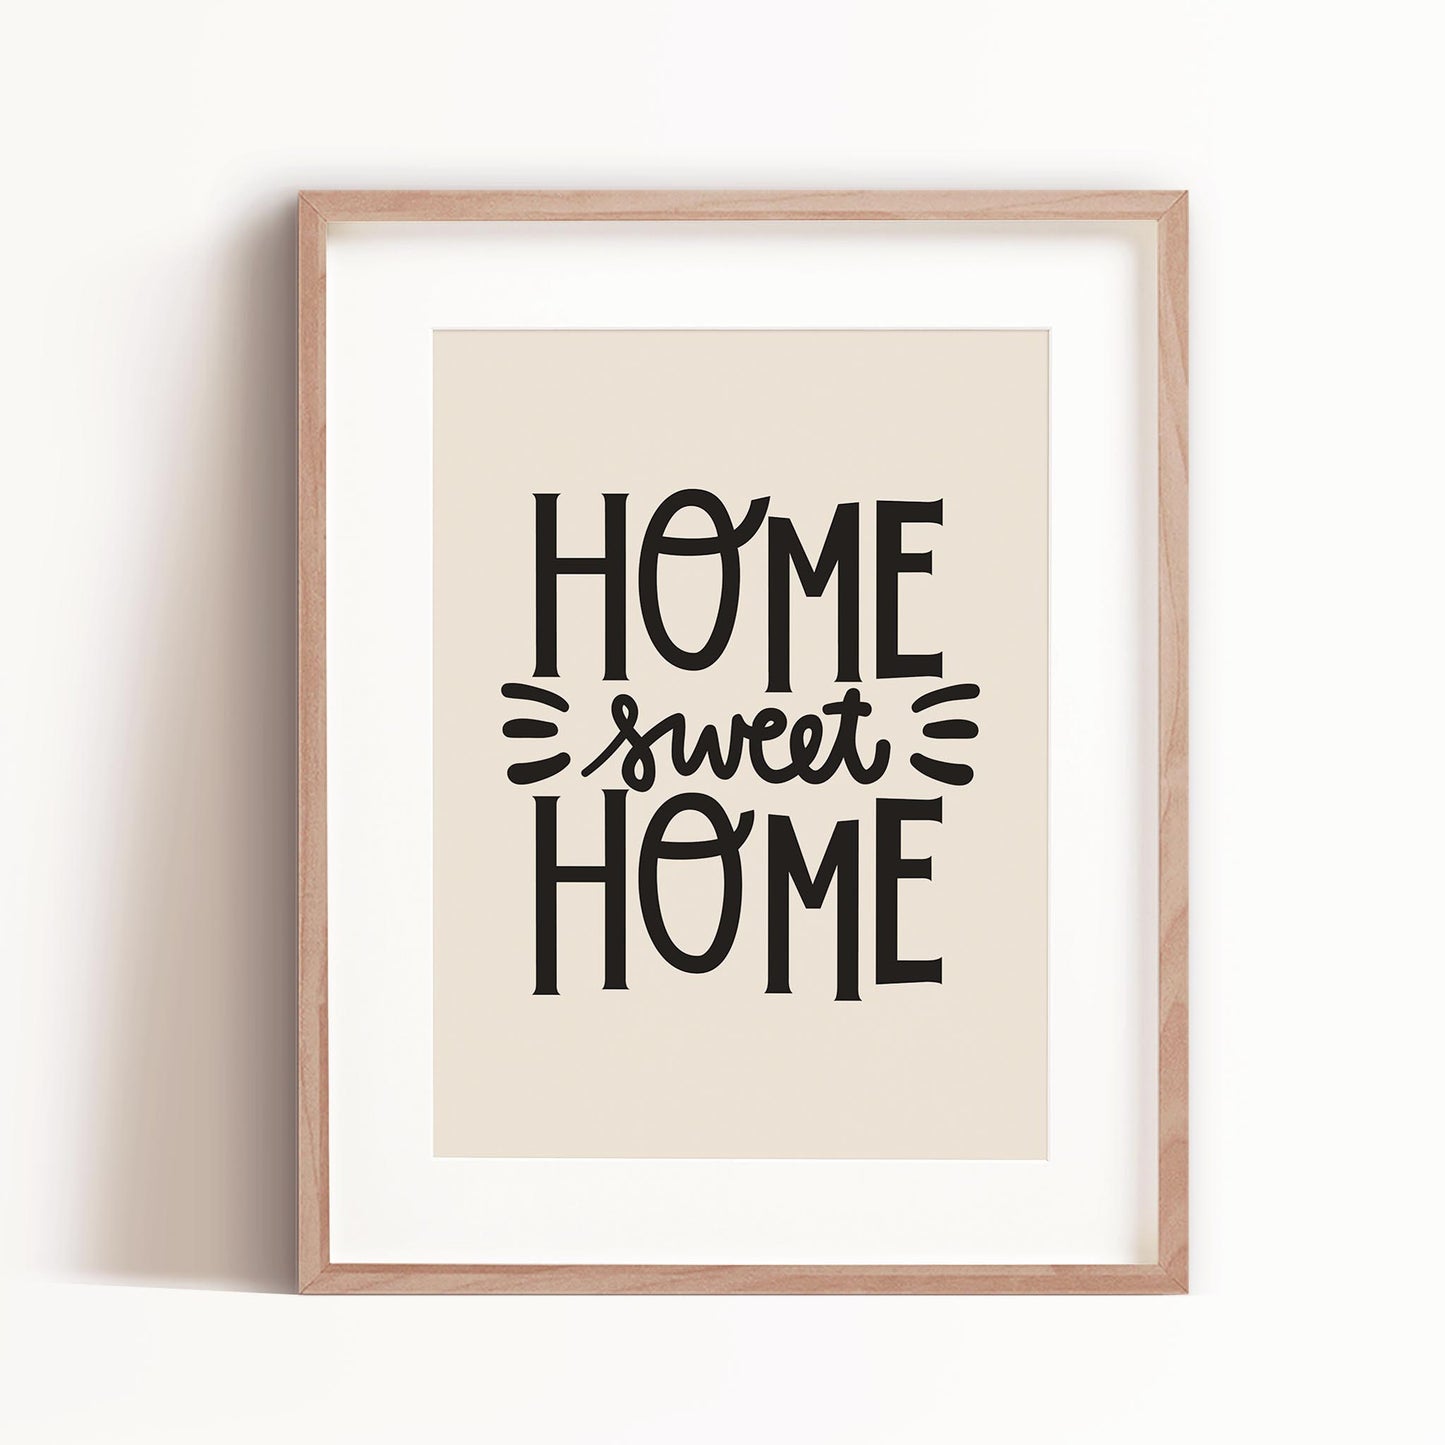 Home Sweet Home art print in black in a frame by artist Brenda Bird.